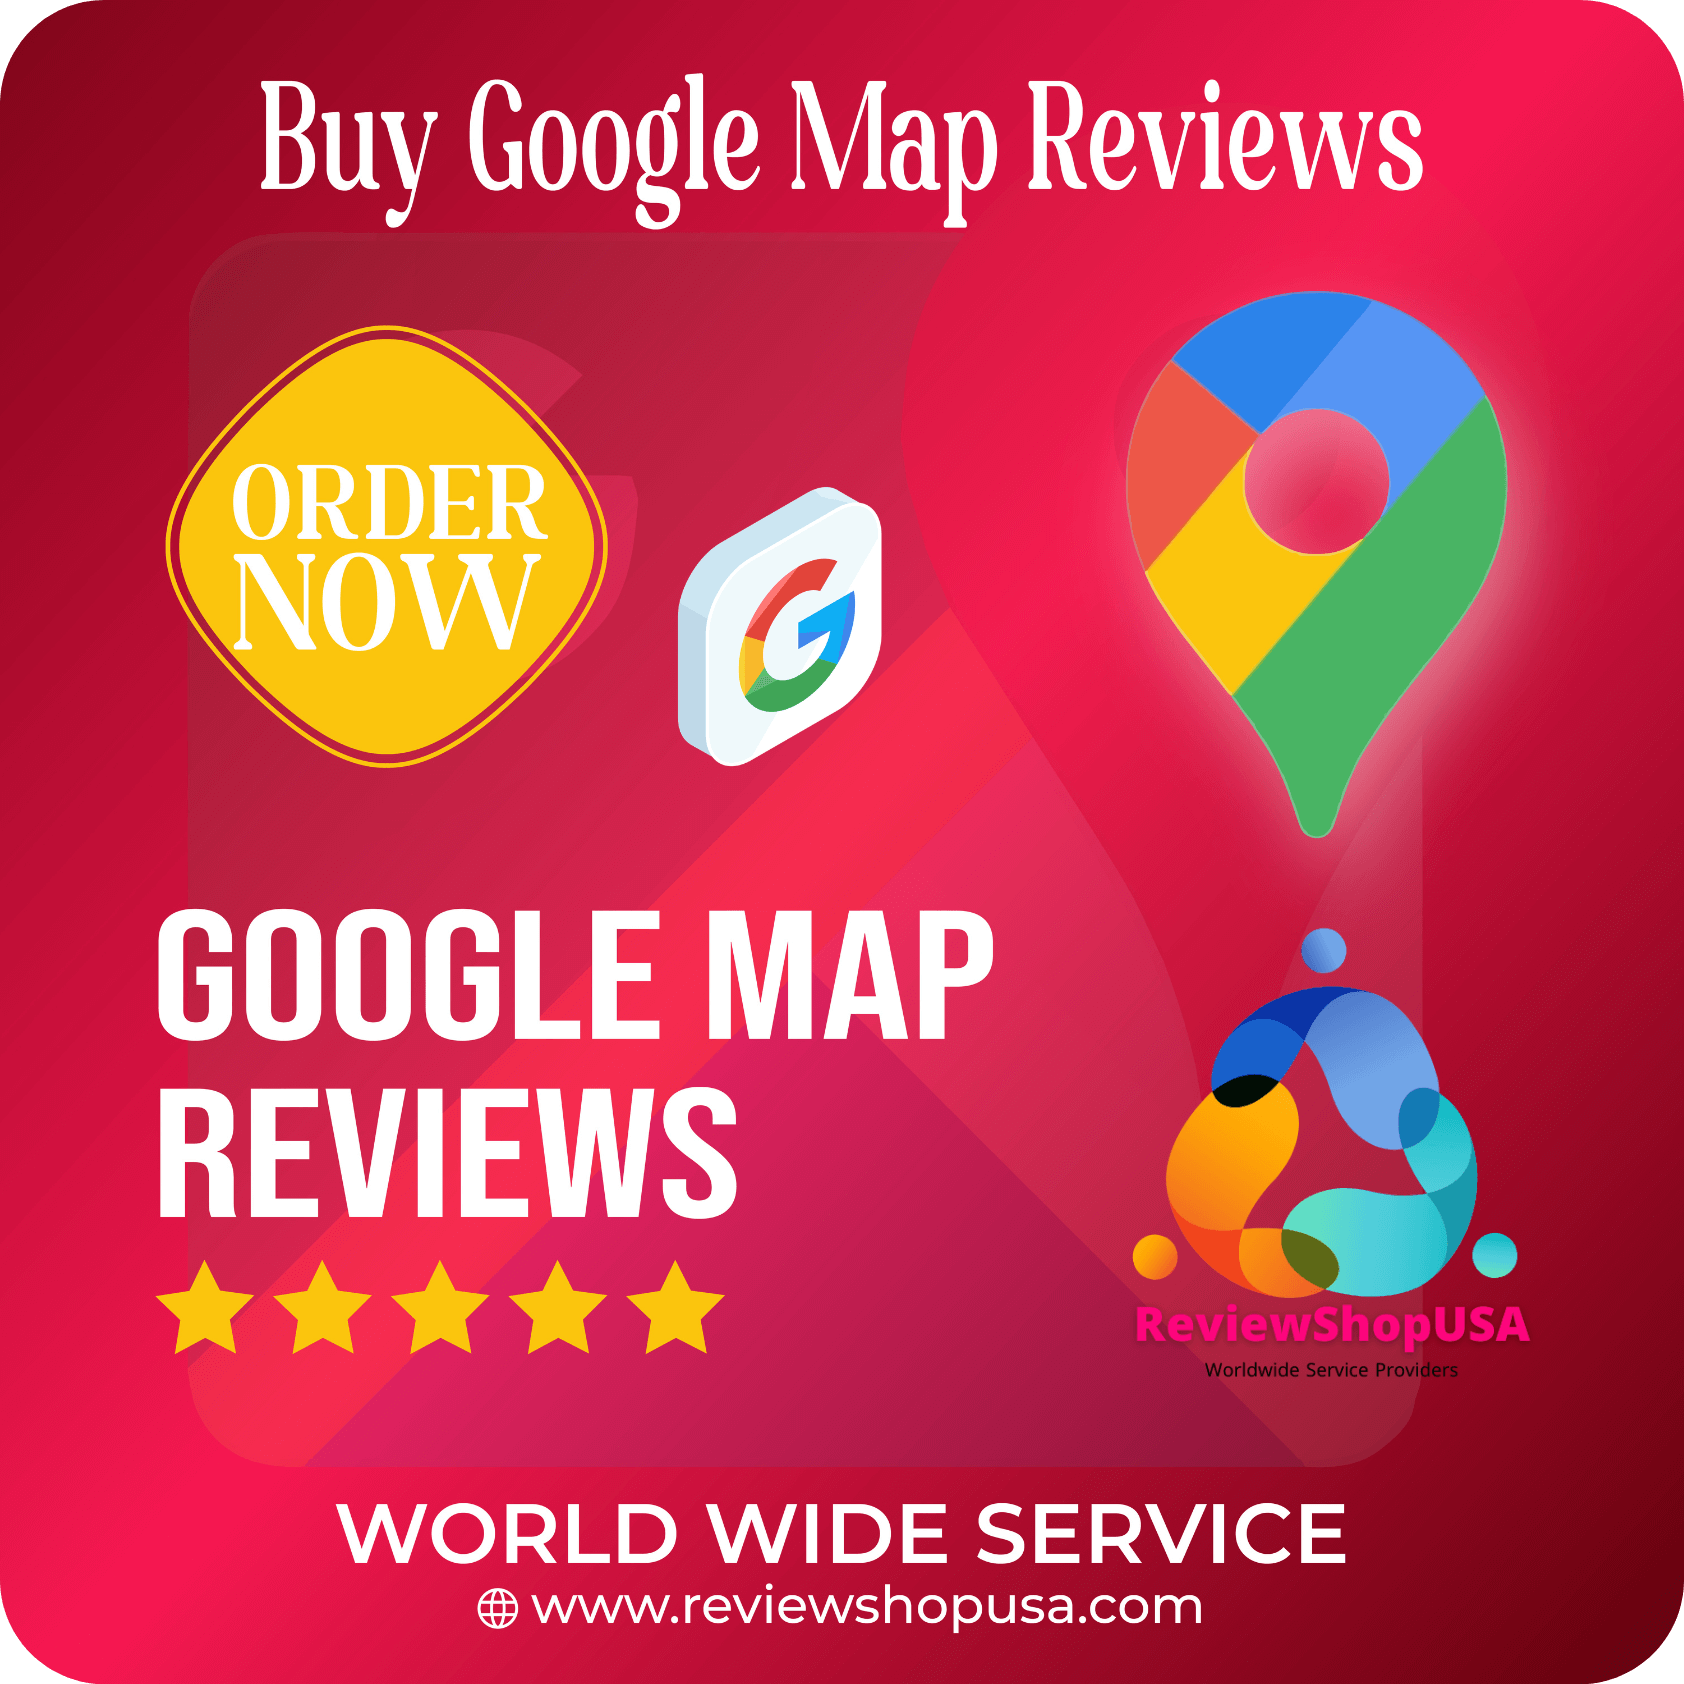 Buy Google Map Reviews - ReviewShopUSA